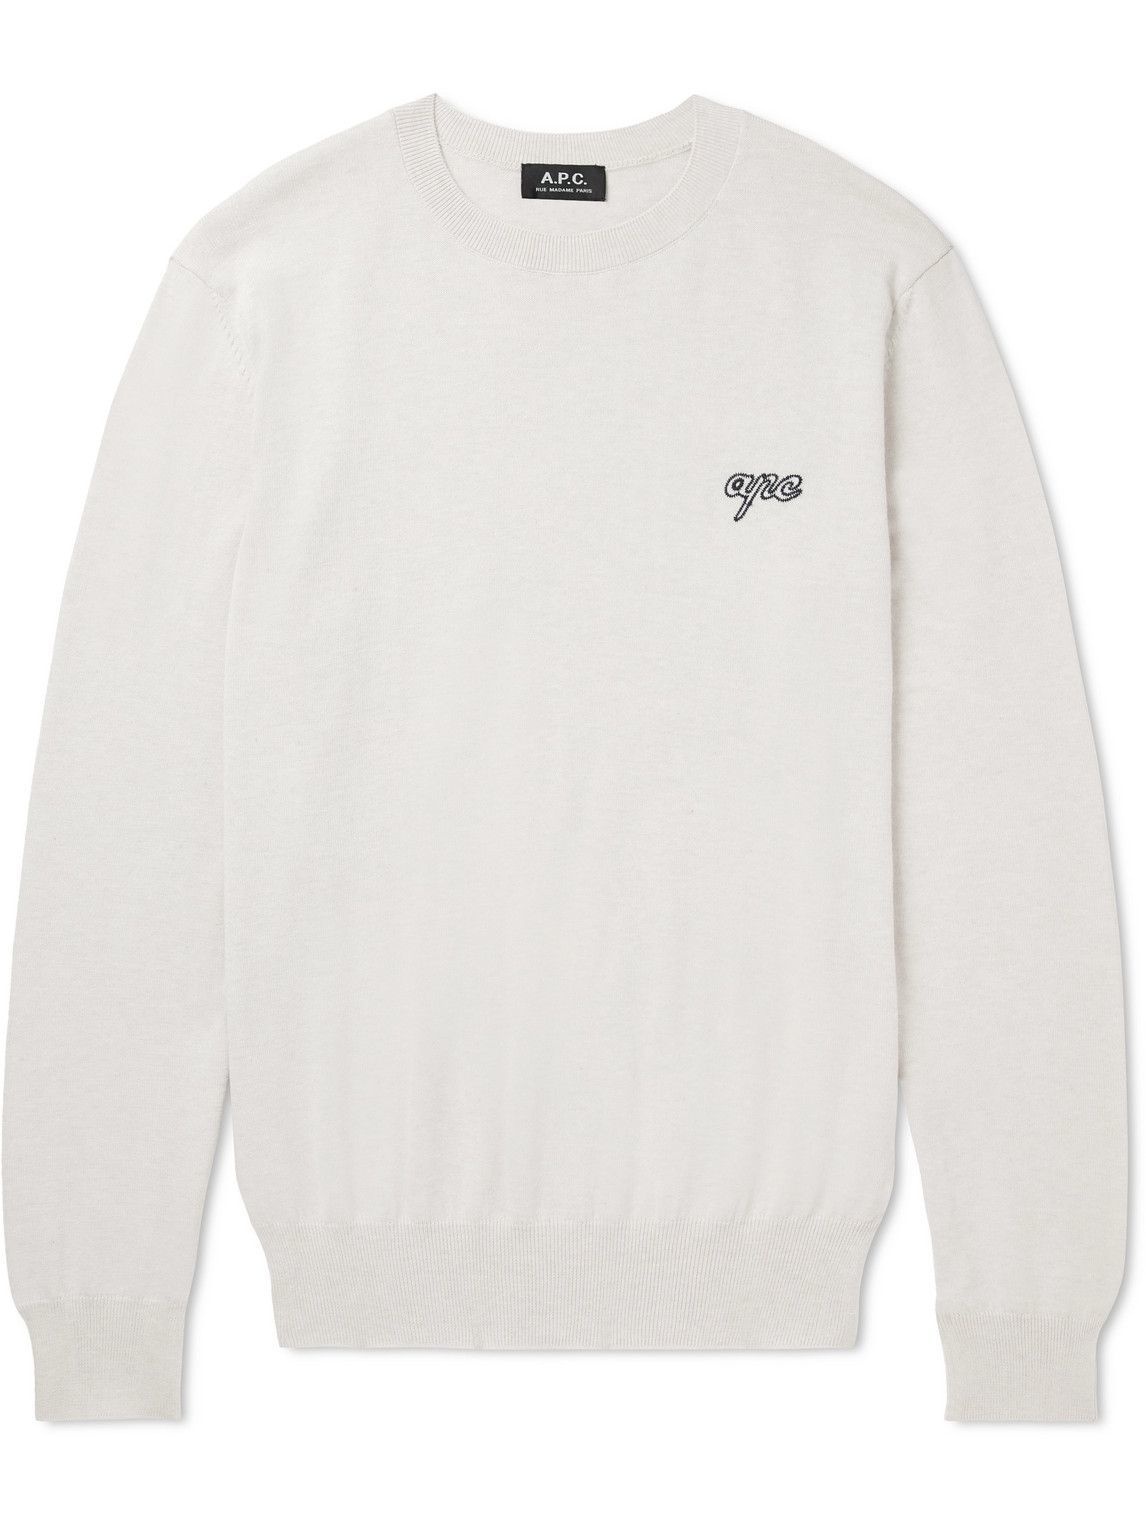 A.P.C. - Otis Logo-Embroidered Cotton Sweater - White A.P.C.